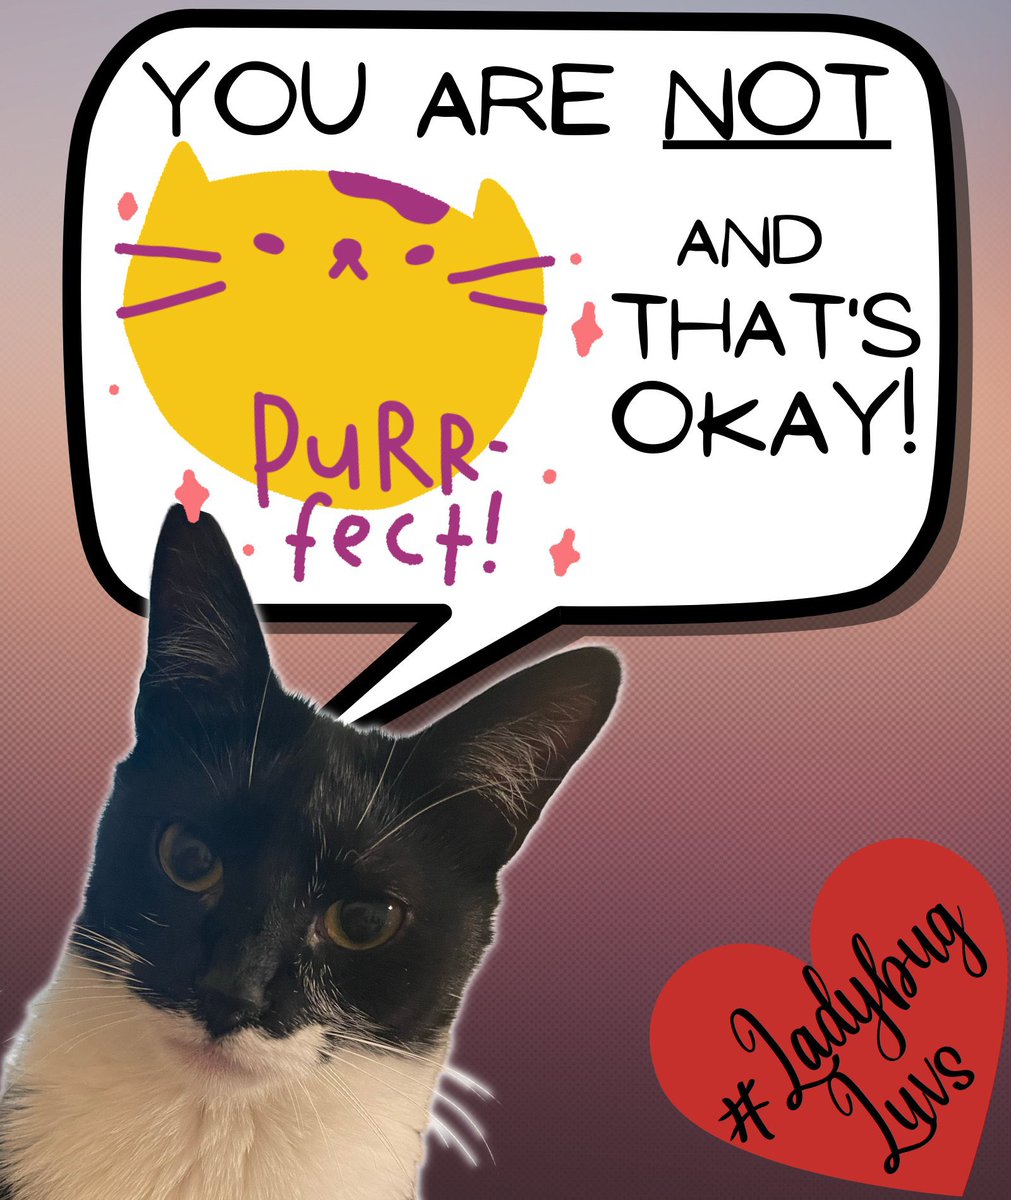 You are not “purrfect” and that’s okay!  #LadybugLuvs #selflove #likeyourself #CatsAreFamily #CatsOfTwitter #MentalHealthAwareness